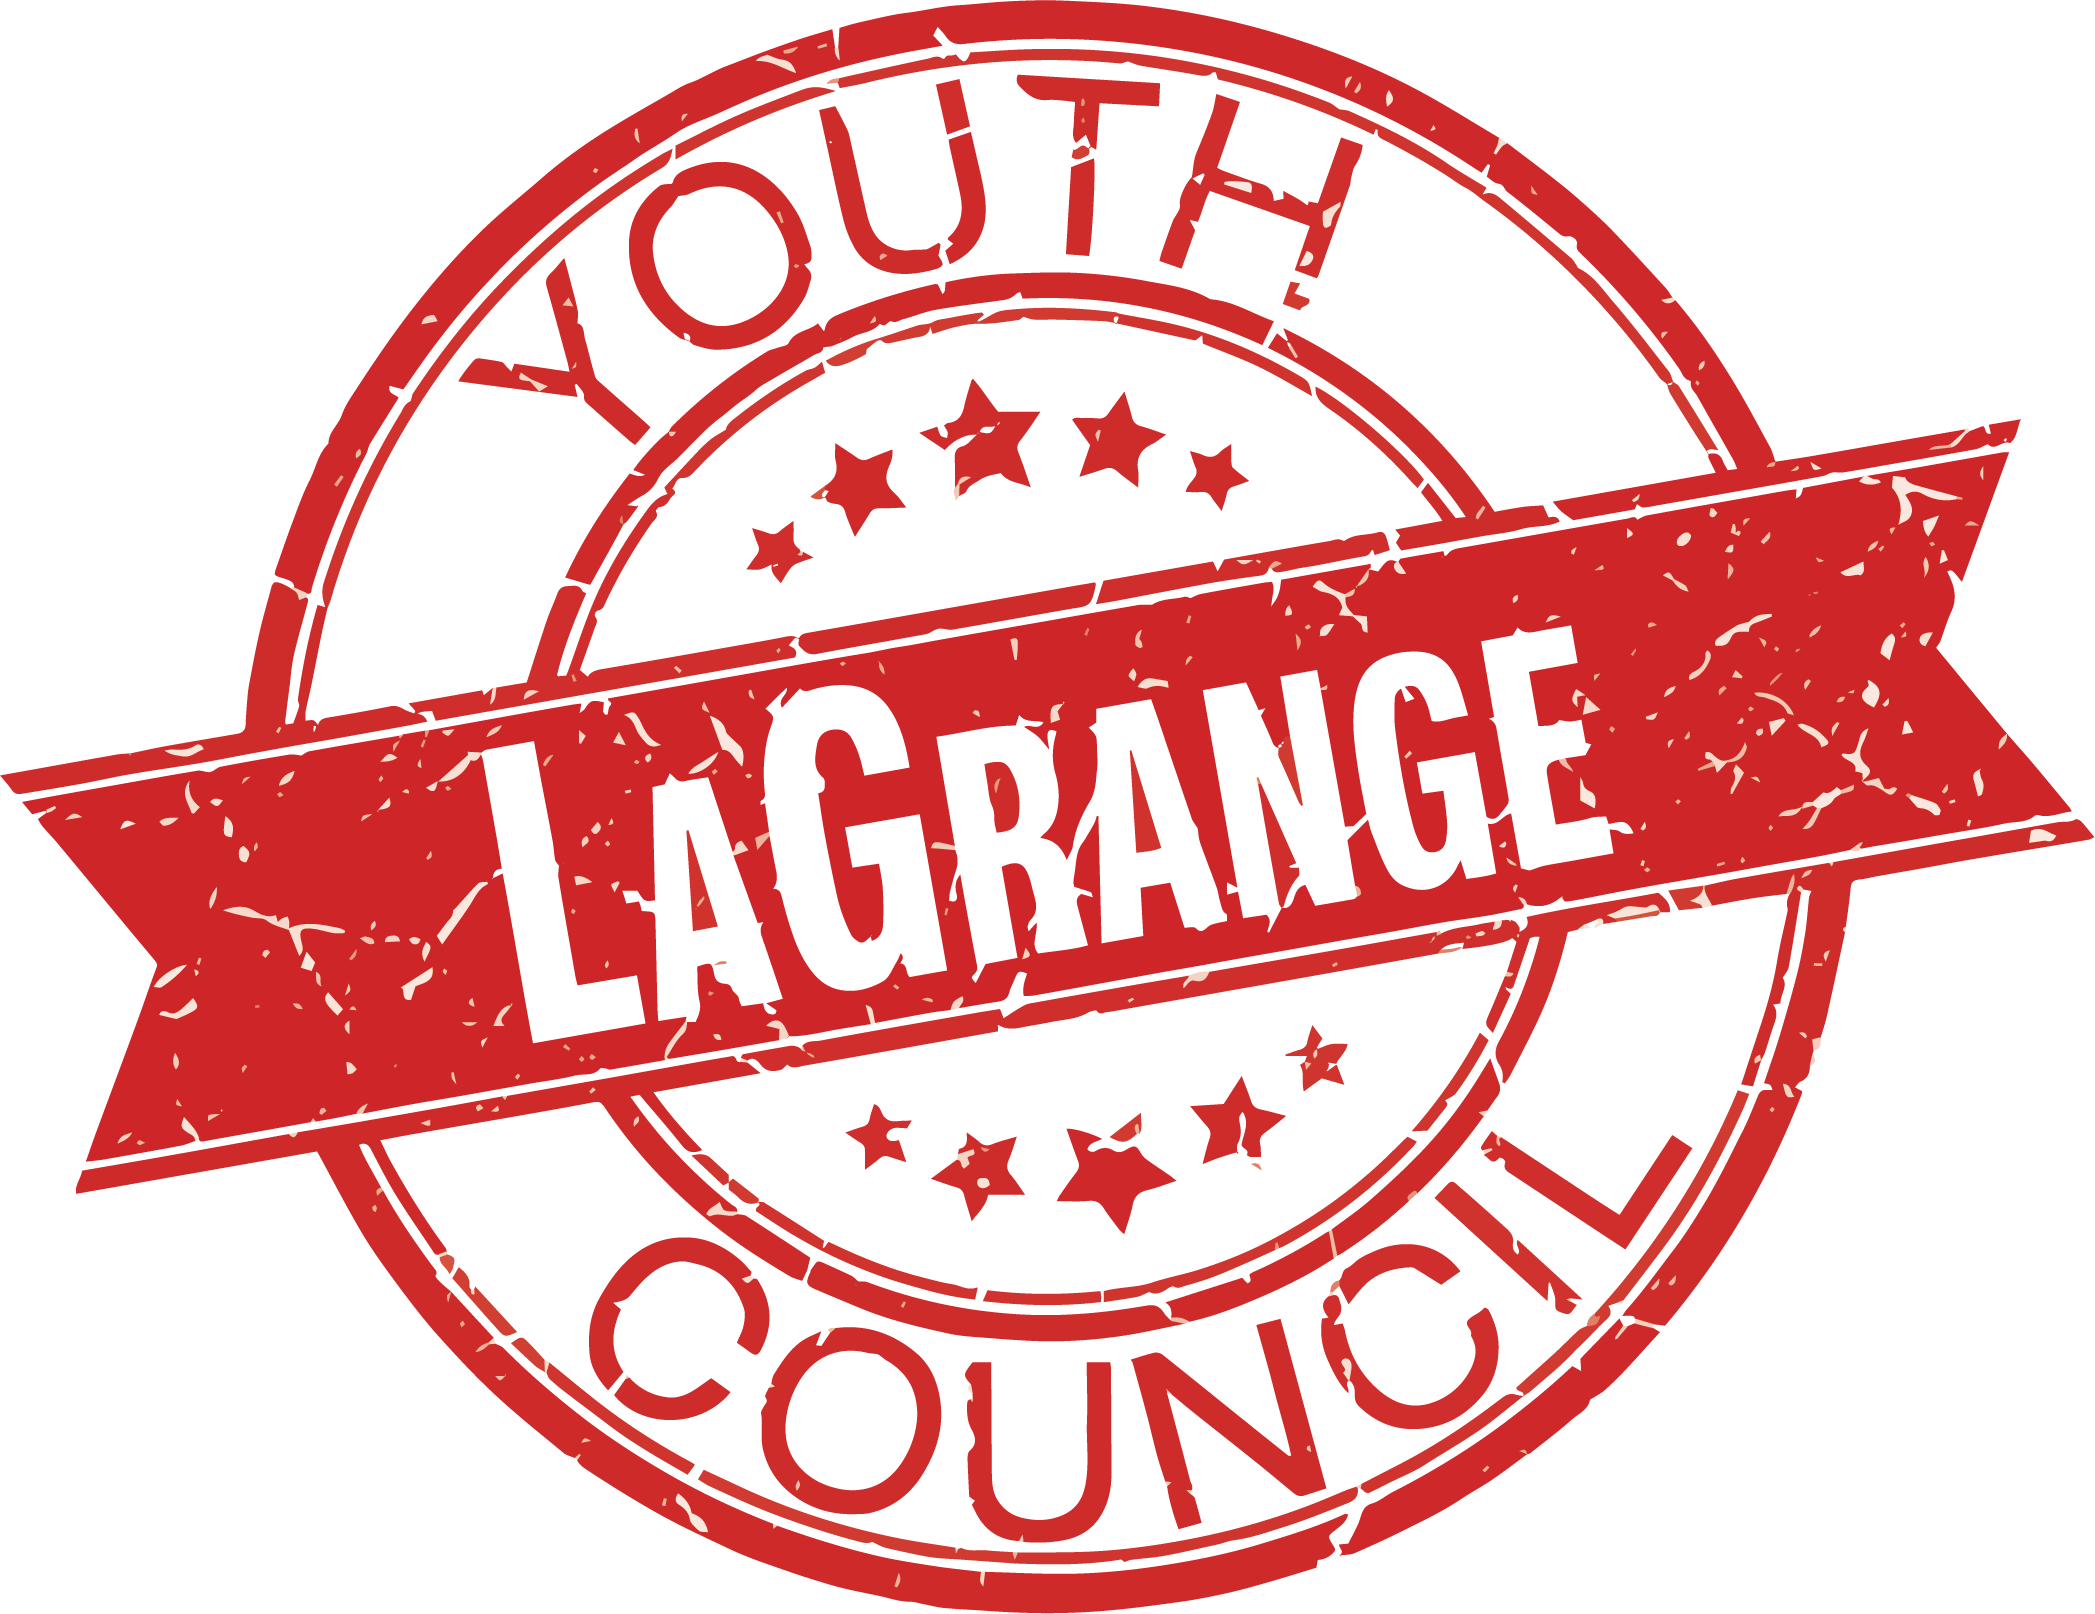 LaGrange Youth Council logo